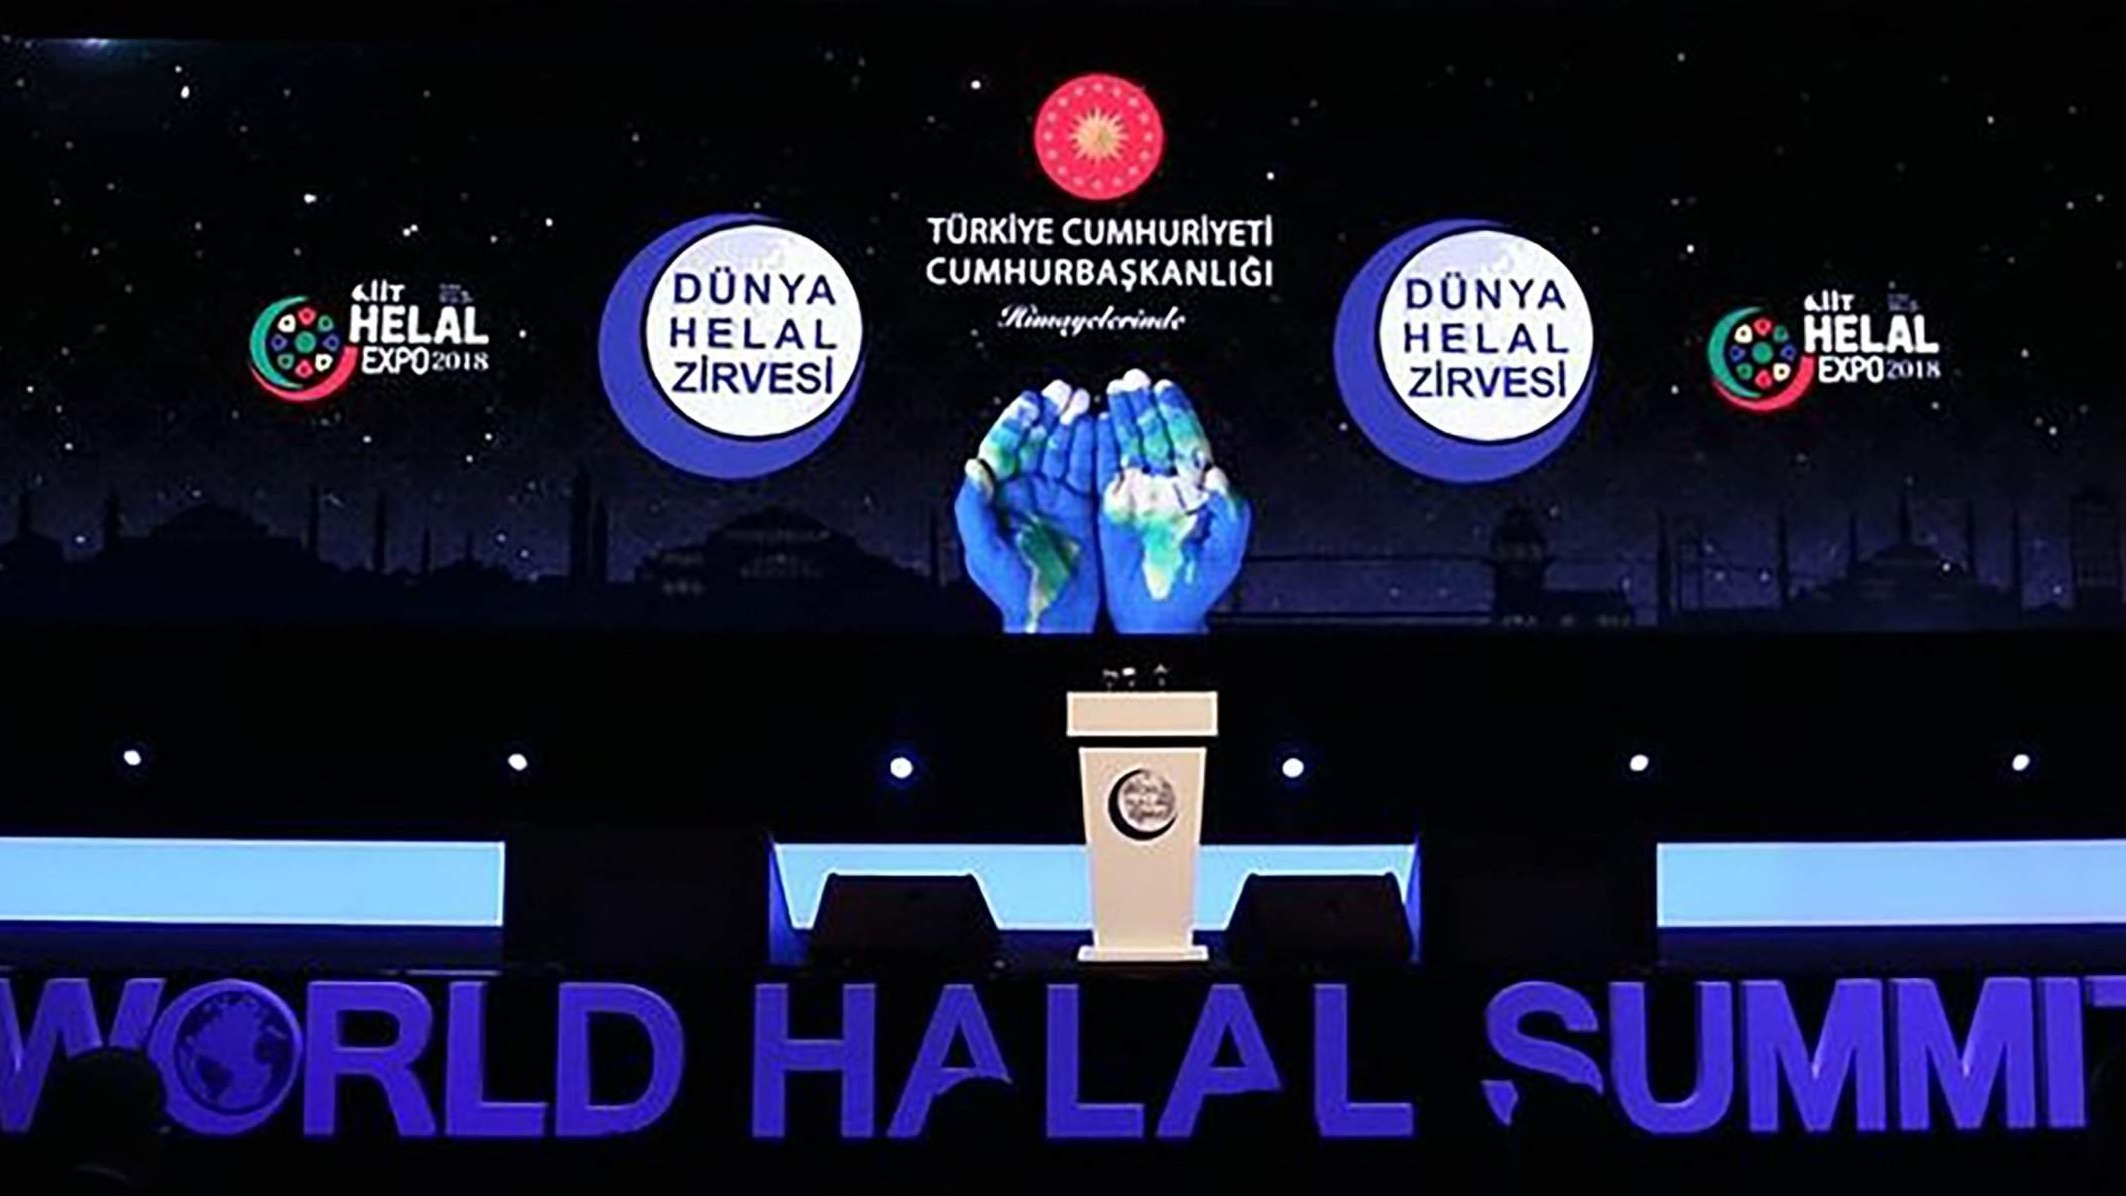 Halal ekonomija u 2020. godini pokazala otpornost i fleksibilnost